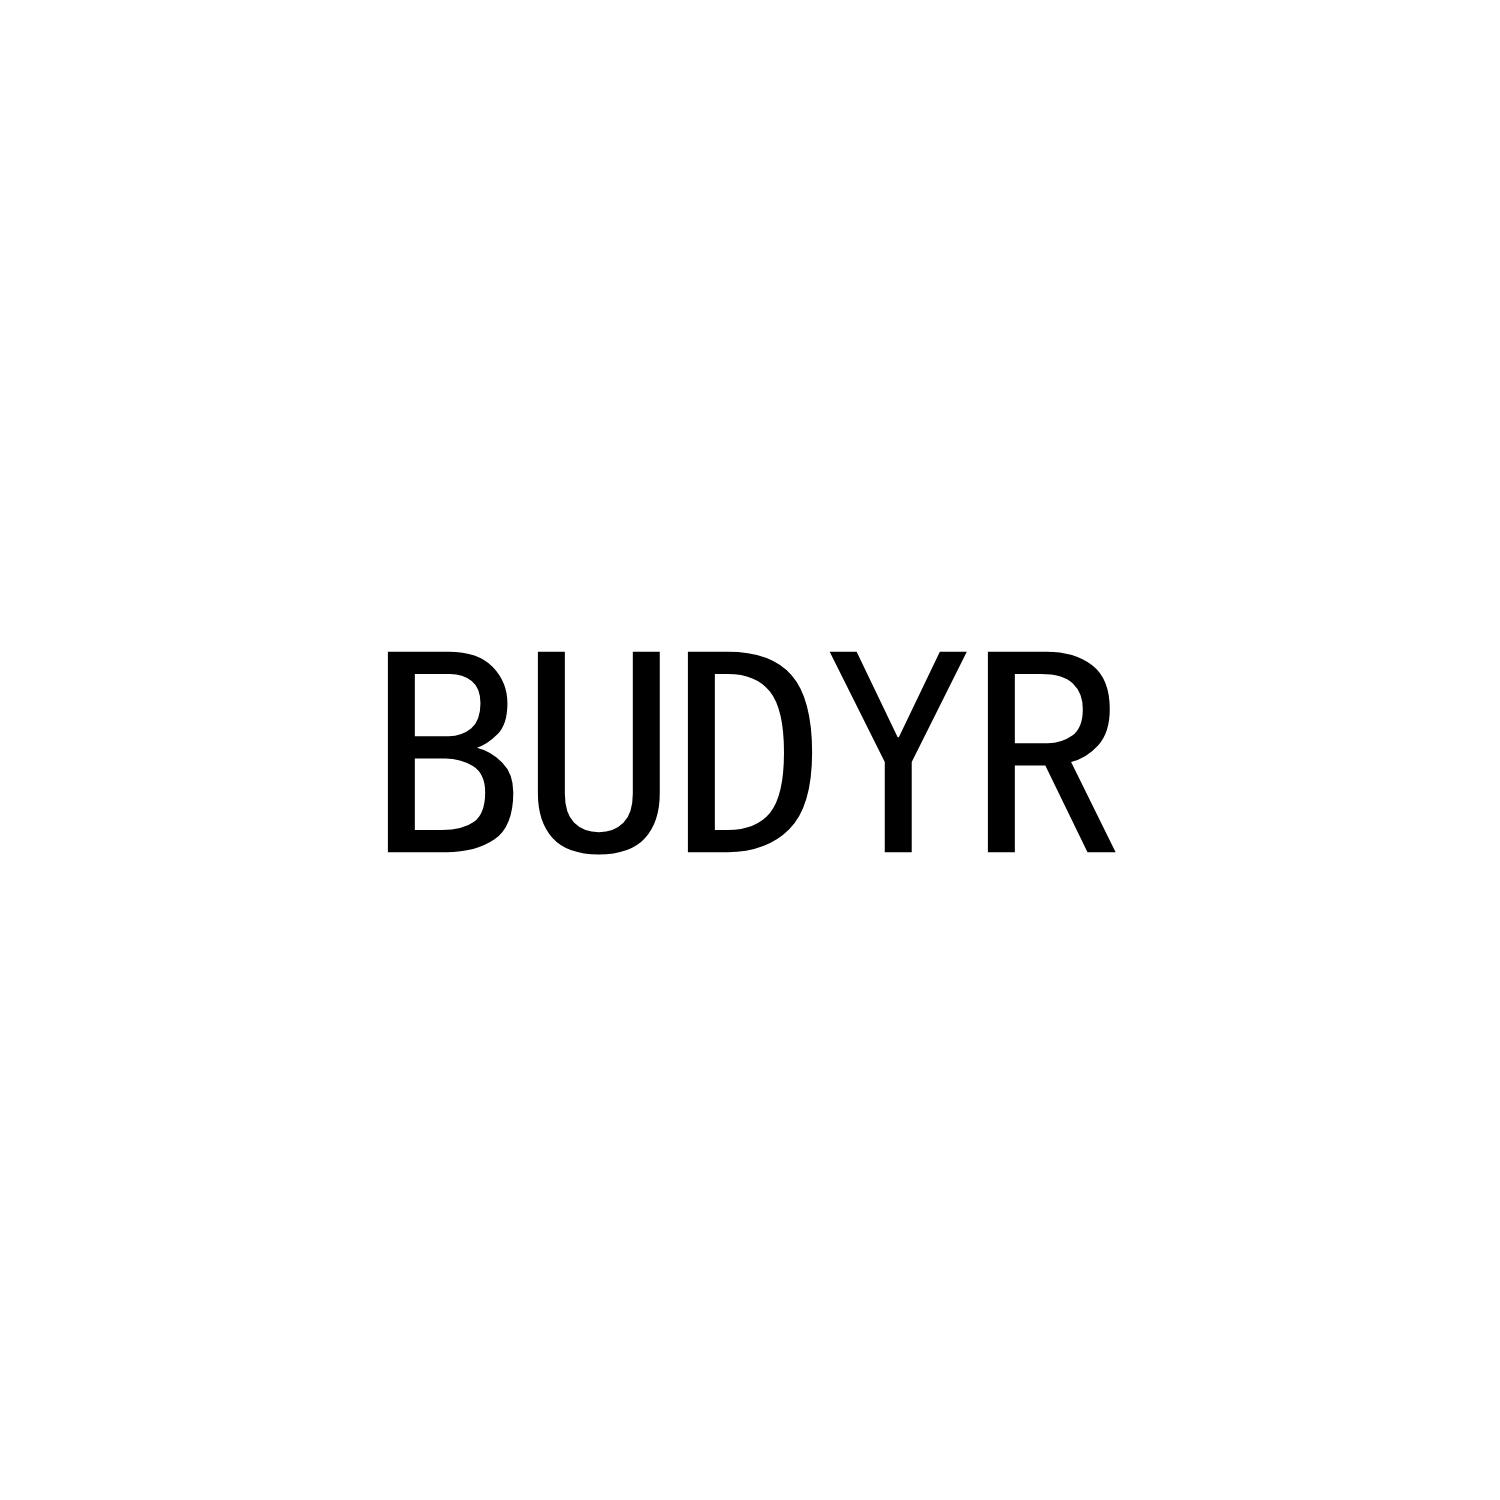 BUDYR